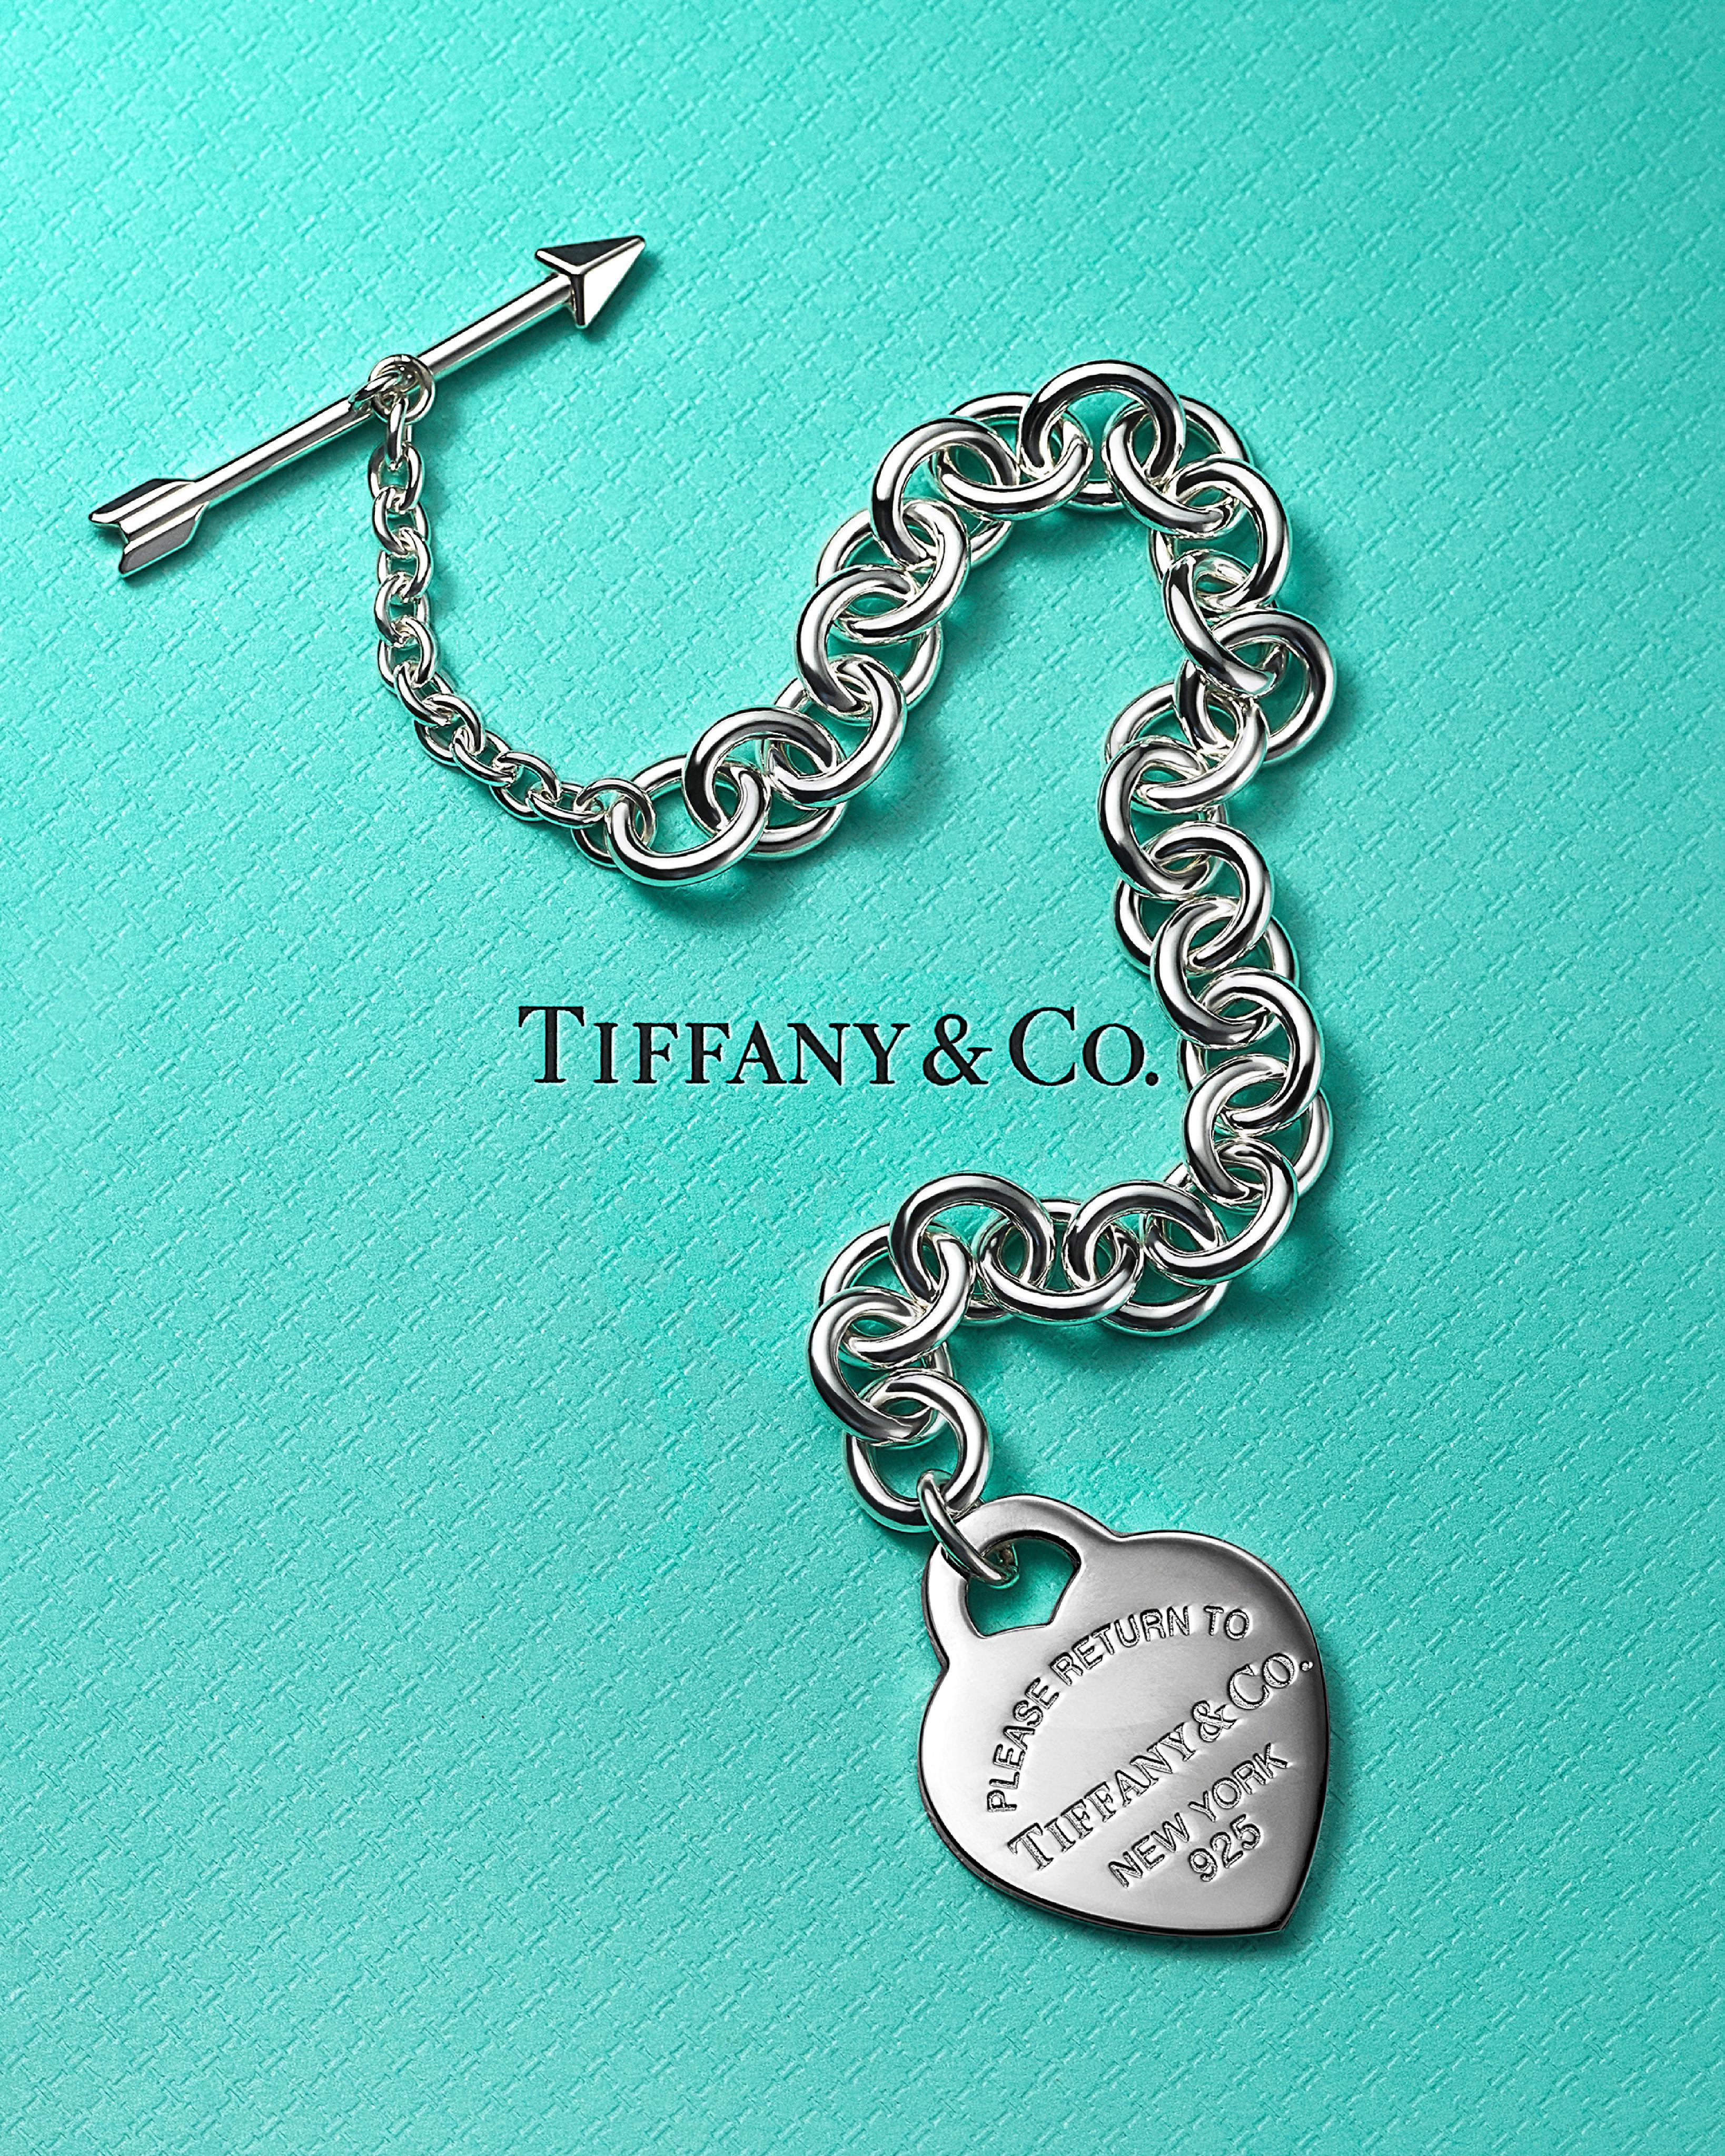 Tiffany & Co. (@TiffanyAndCo) / Twitter